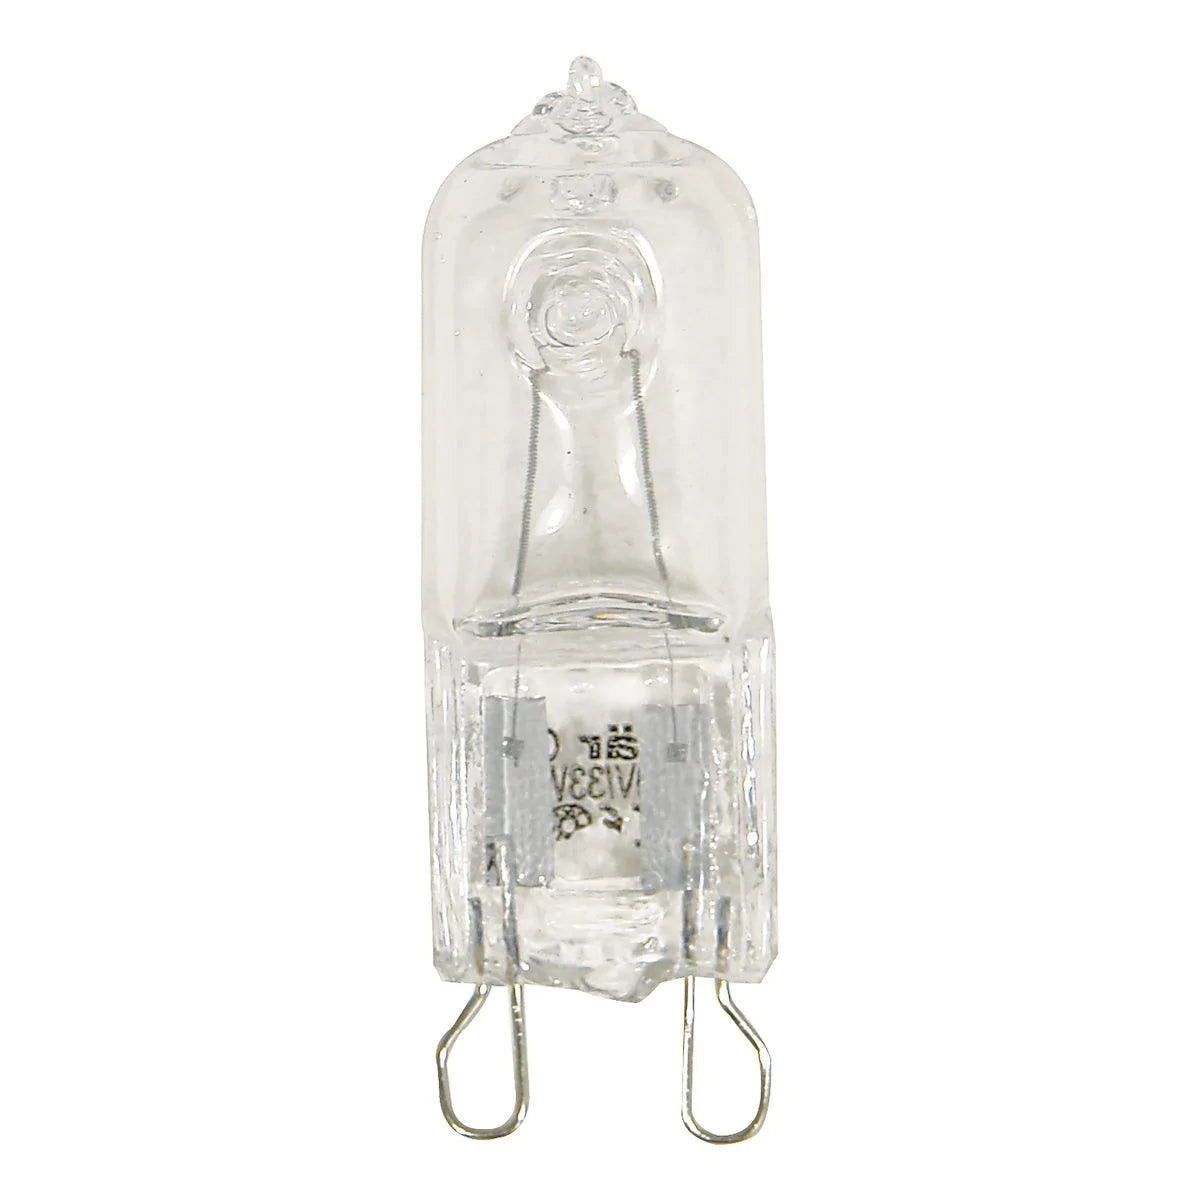 DAR 33W 240V G9 HALOGEN LAMP (SOLD AS 3PK)  |BULBG933 - Peter Murphy Lighting & Electrical Ltd